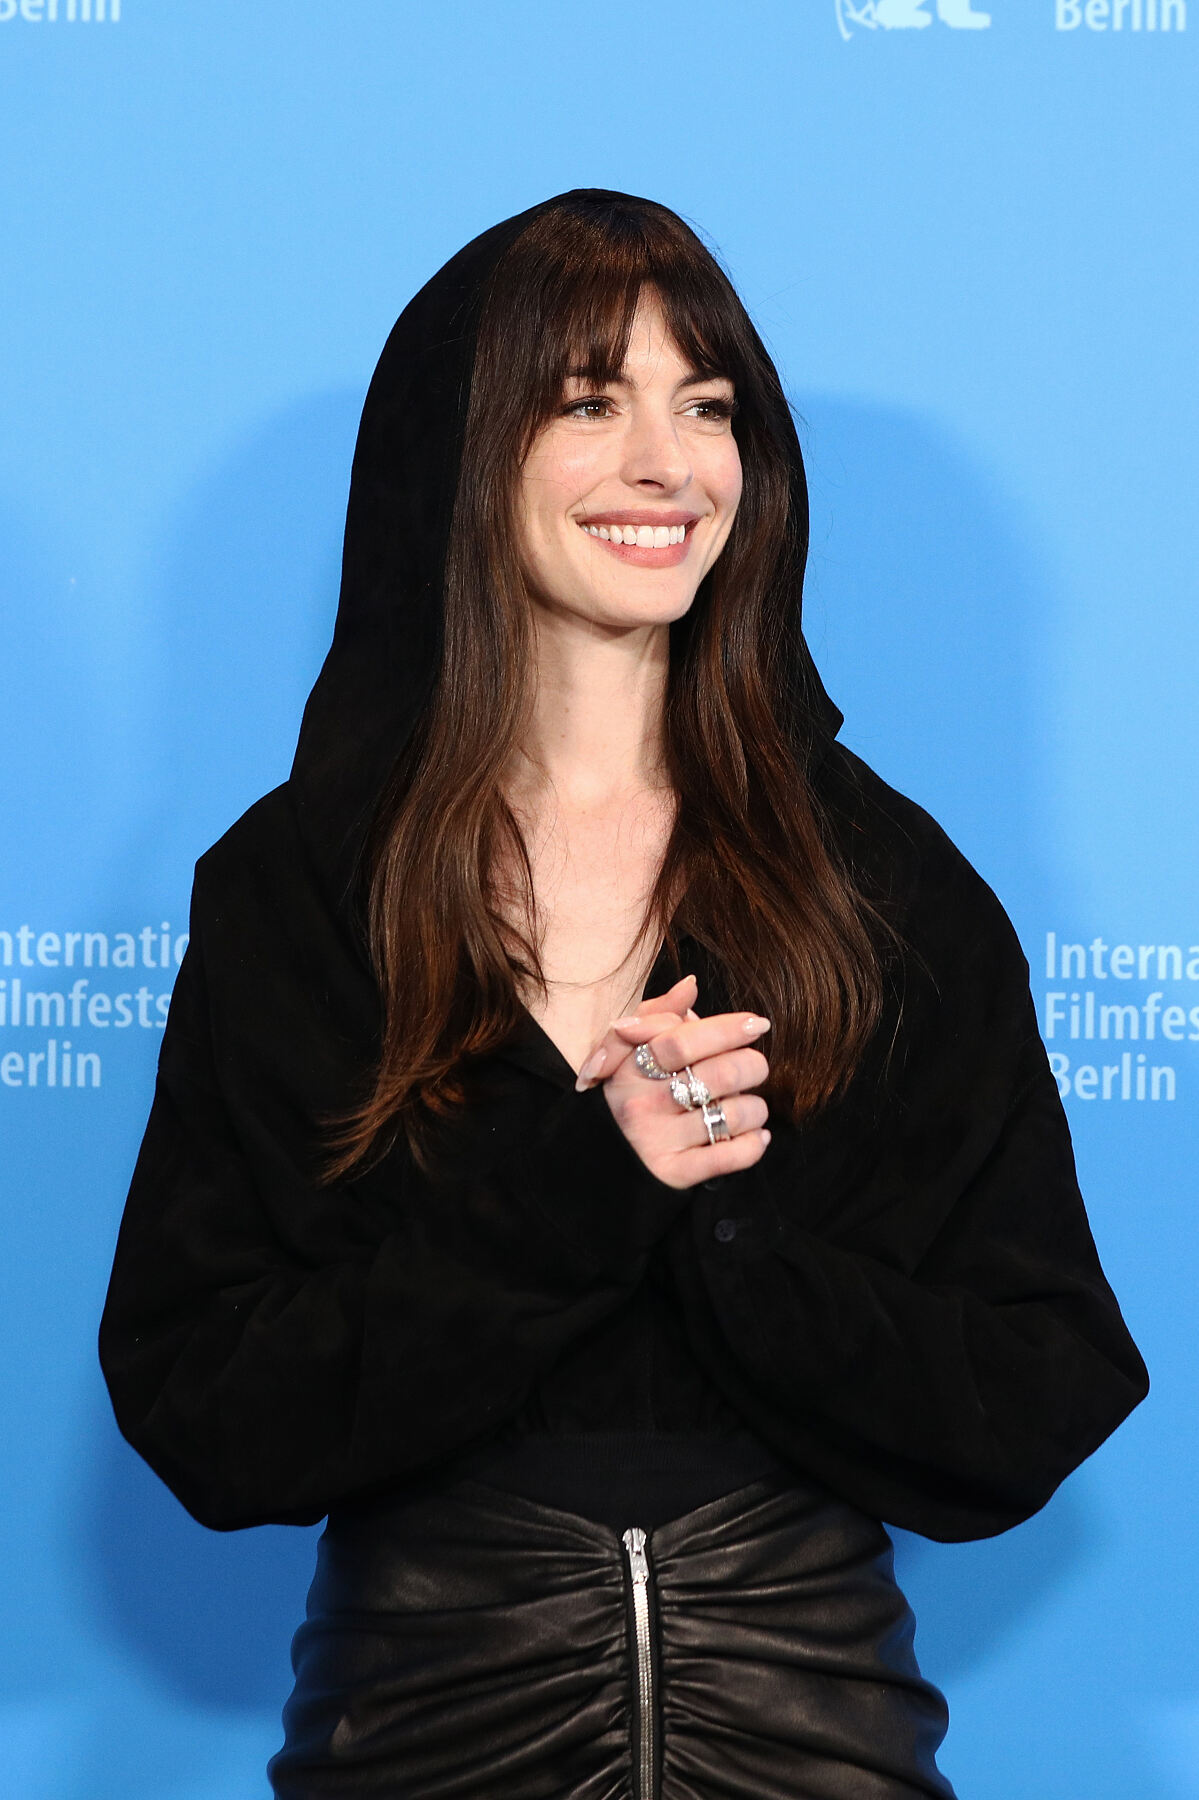 Bulgari_Berlin International Film Festival_Anne Hathaway (1)